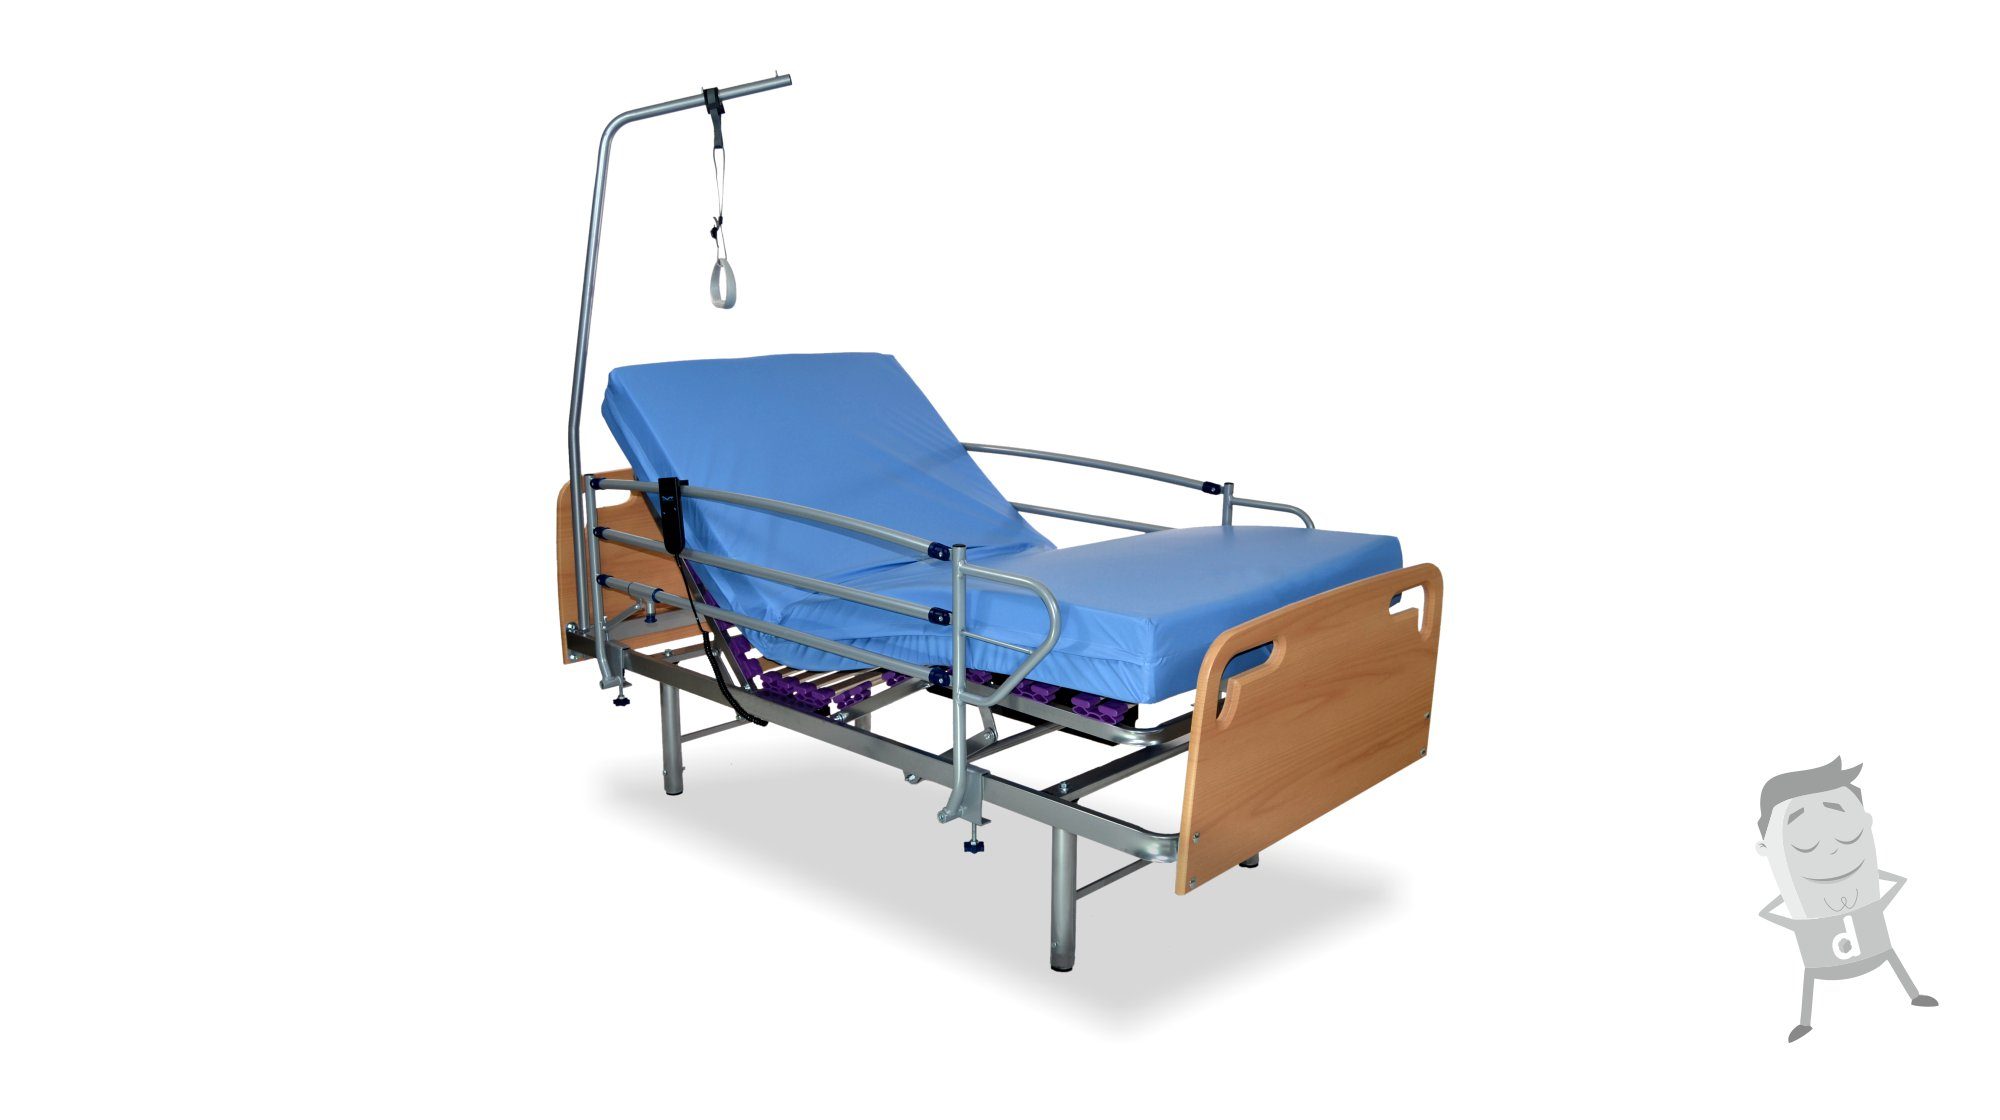 cama-hospitalaria-ortopedica-sanitaria-motorizada-para-enfermos-articulada-patas-elevable-regulables-cama-completa-posicion-plegada